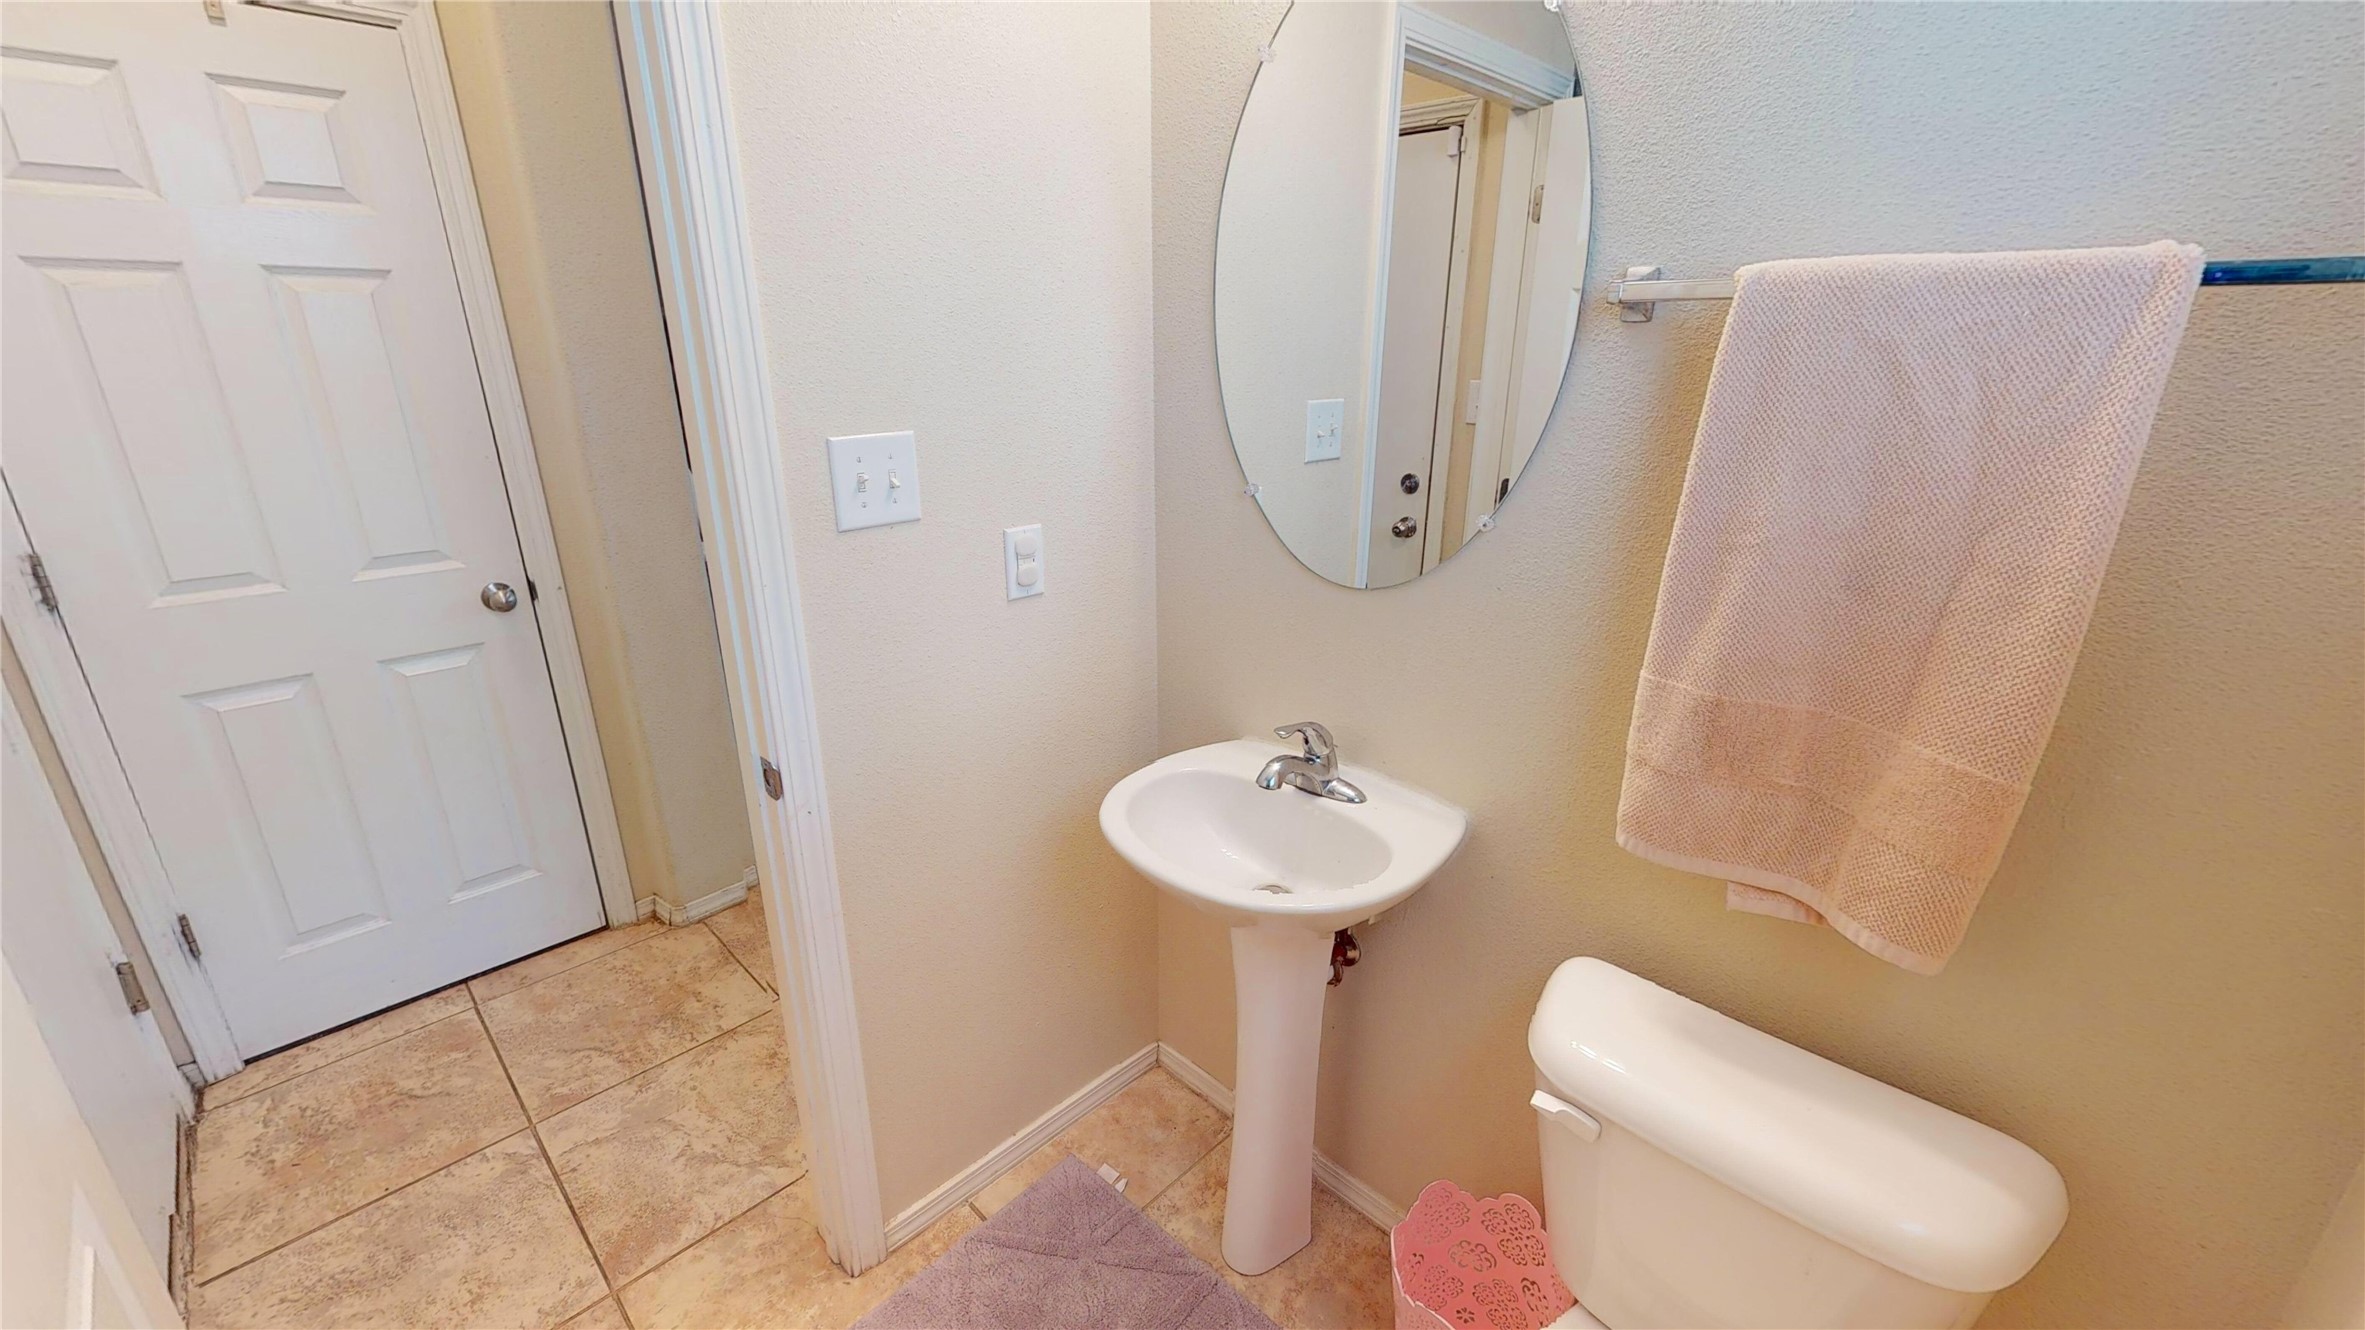 28 Carson Valley, Santa Fe, New Mexico 87508, 3 Bedrooms Bedrooms, ,3 BathroomsBathrooms,Residential,For Sale,28 Carson Valley,202401138